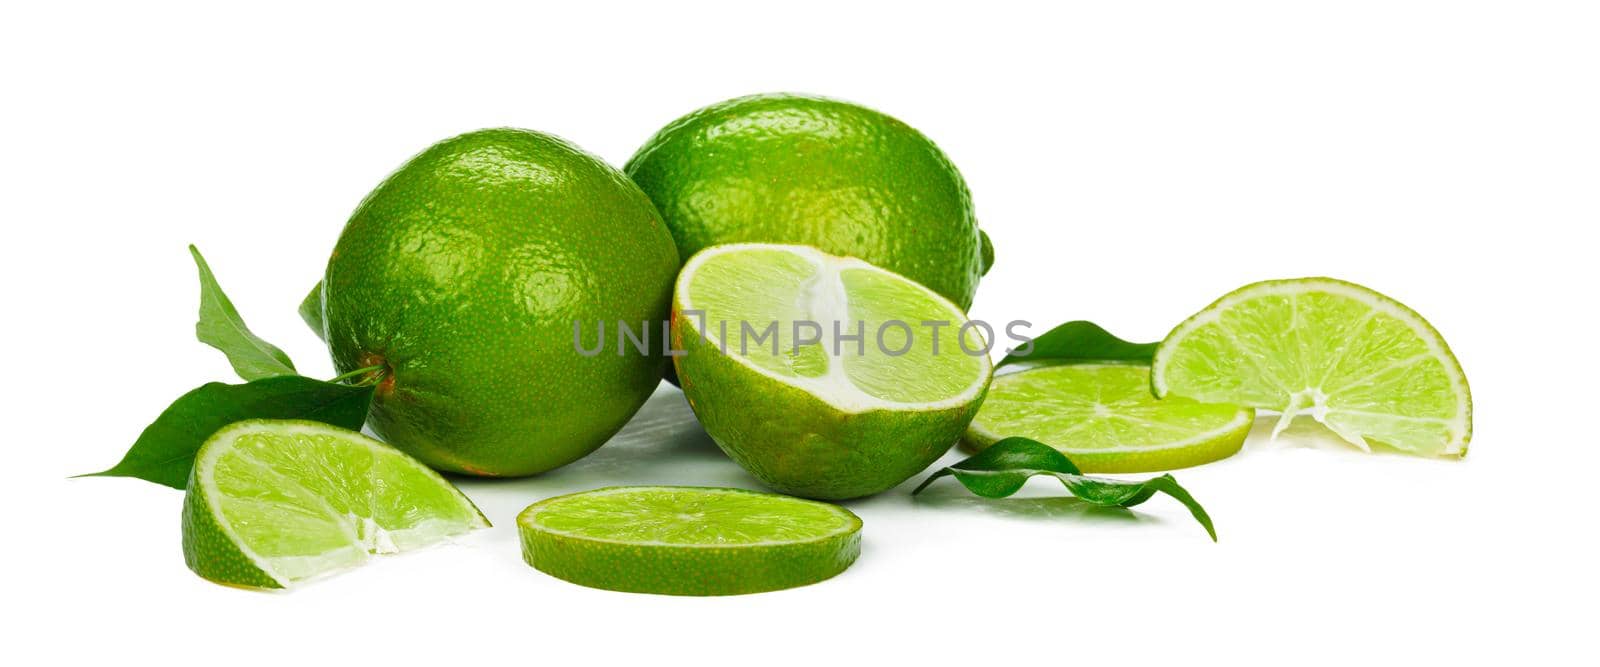 Chopped lime fruit isolated on white background by Fabrikasimf